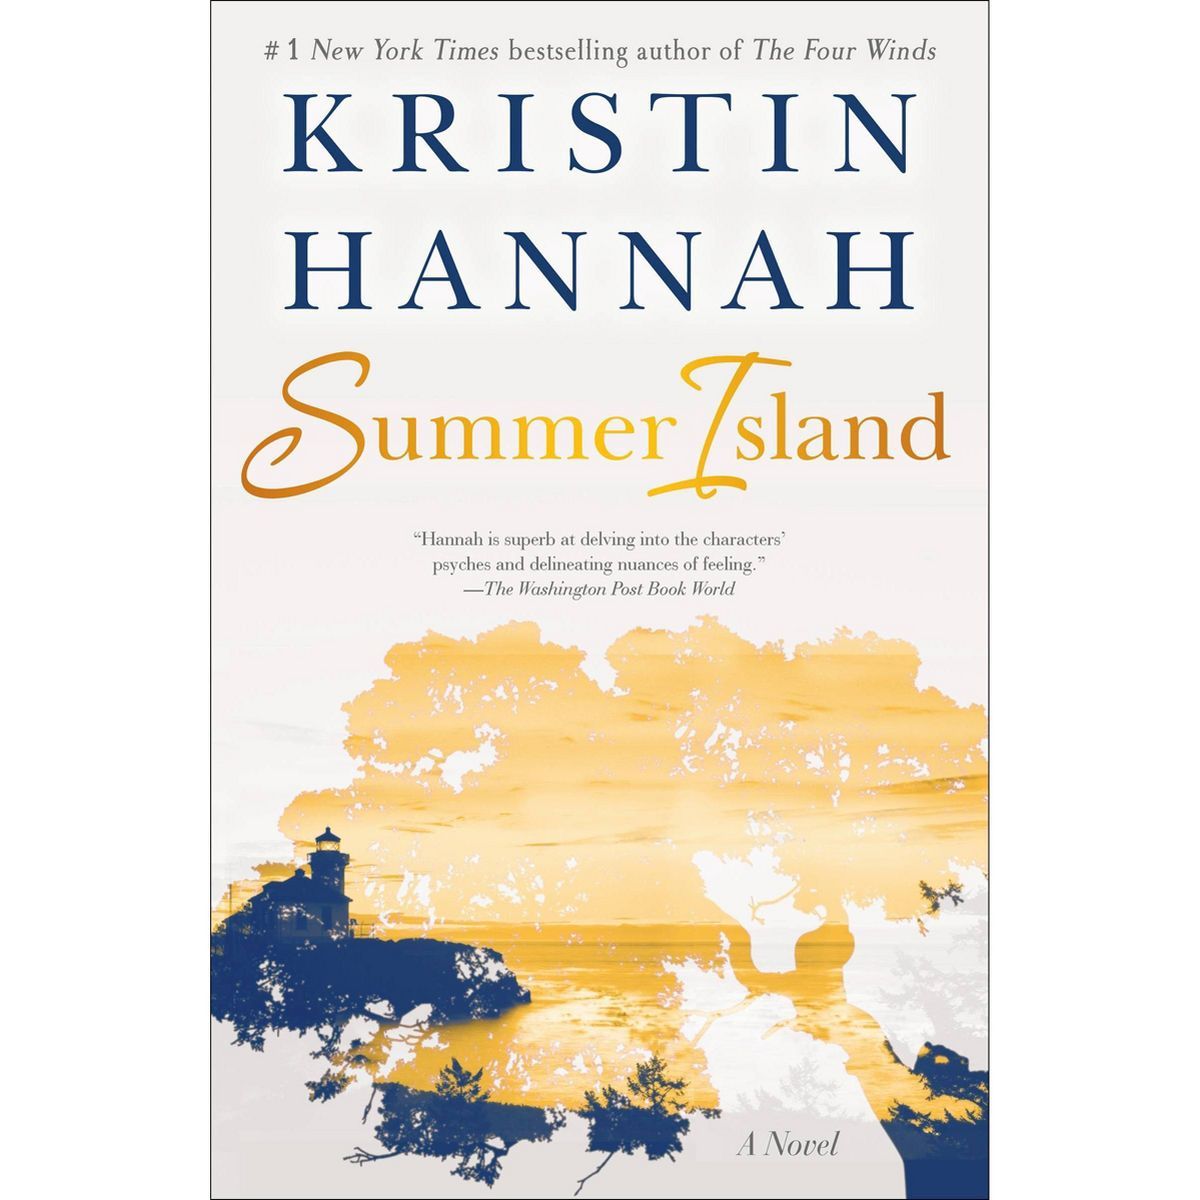 Summer Island (Paperback) by Kristin Hannah | Target